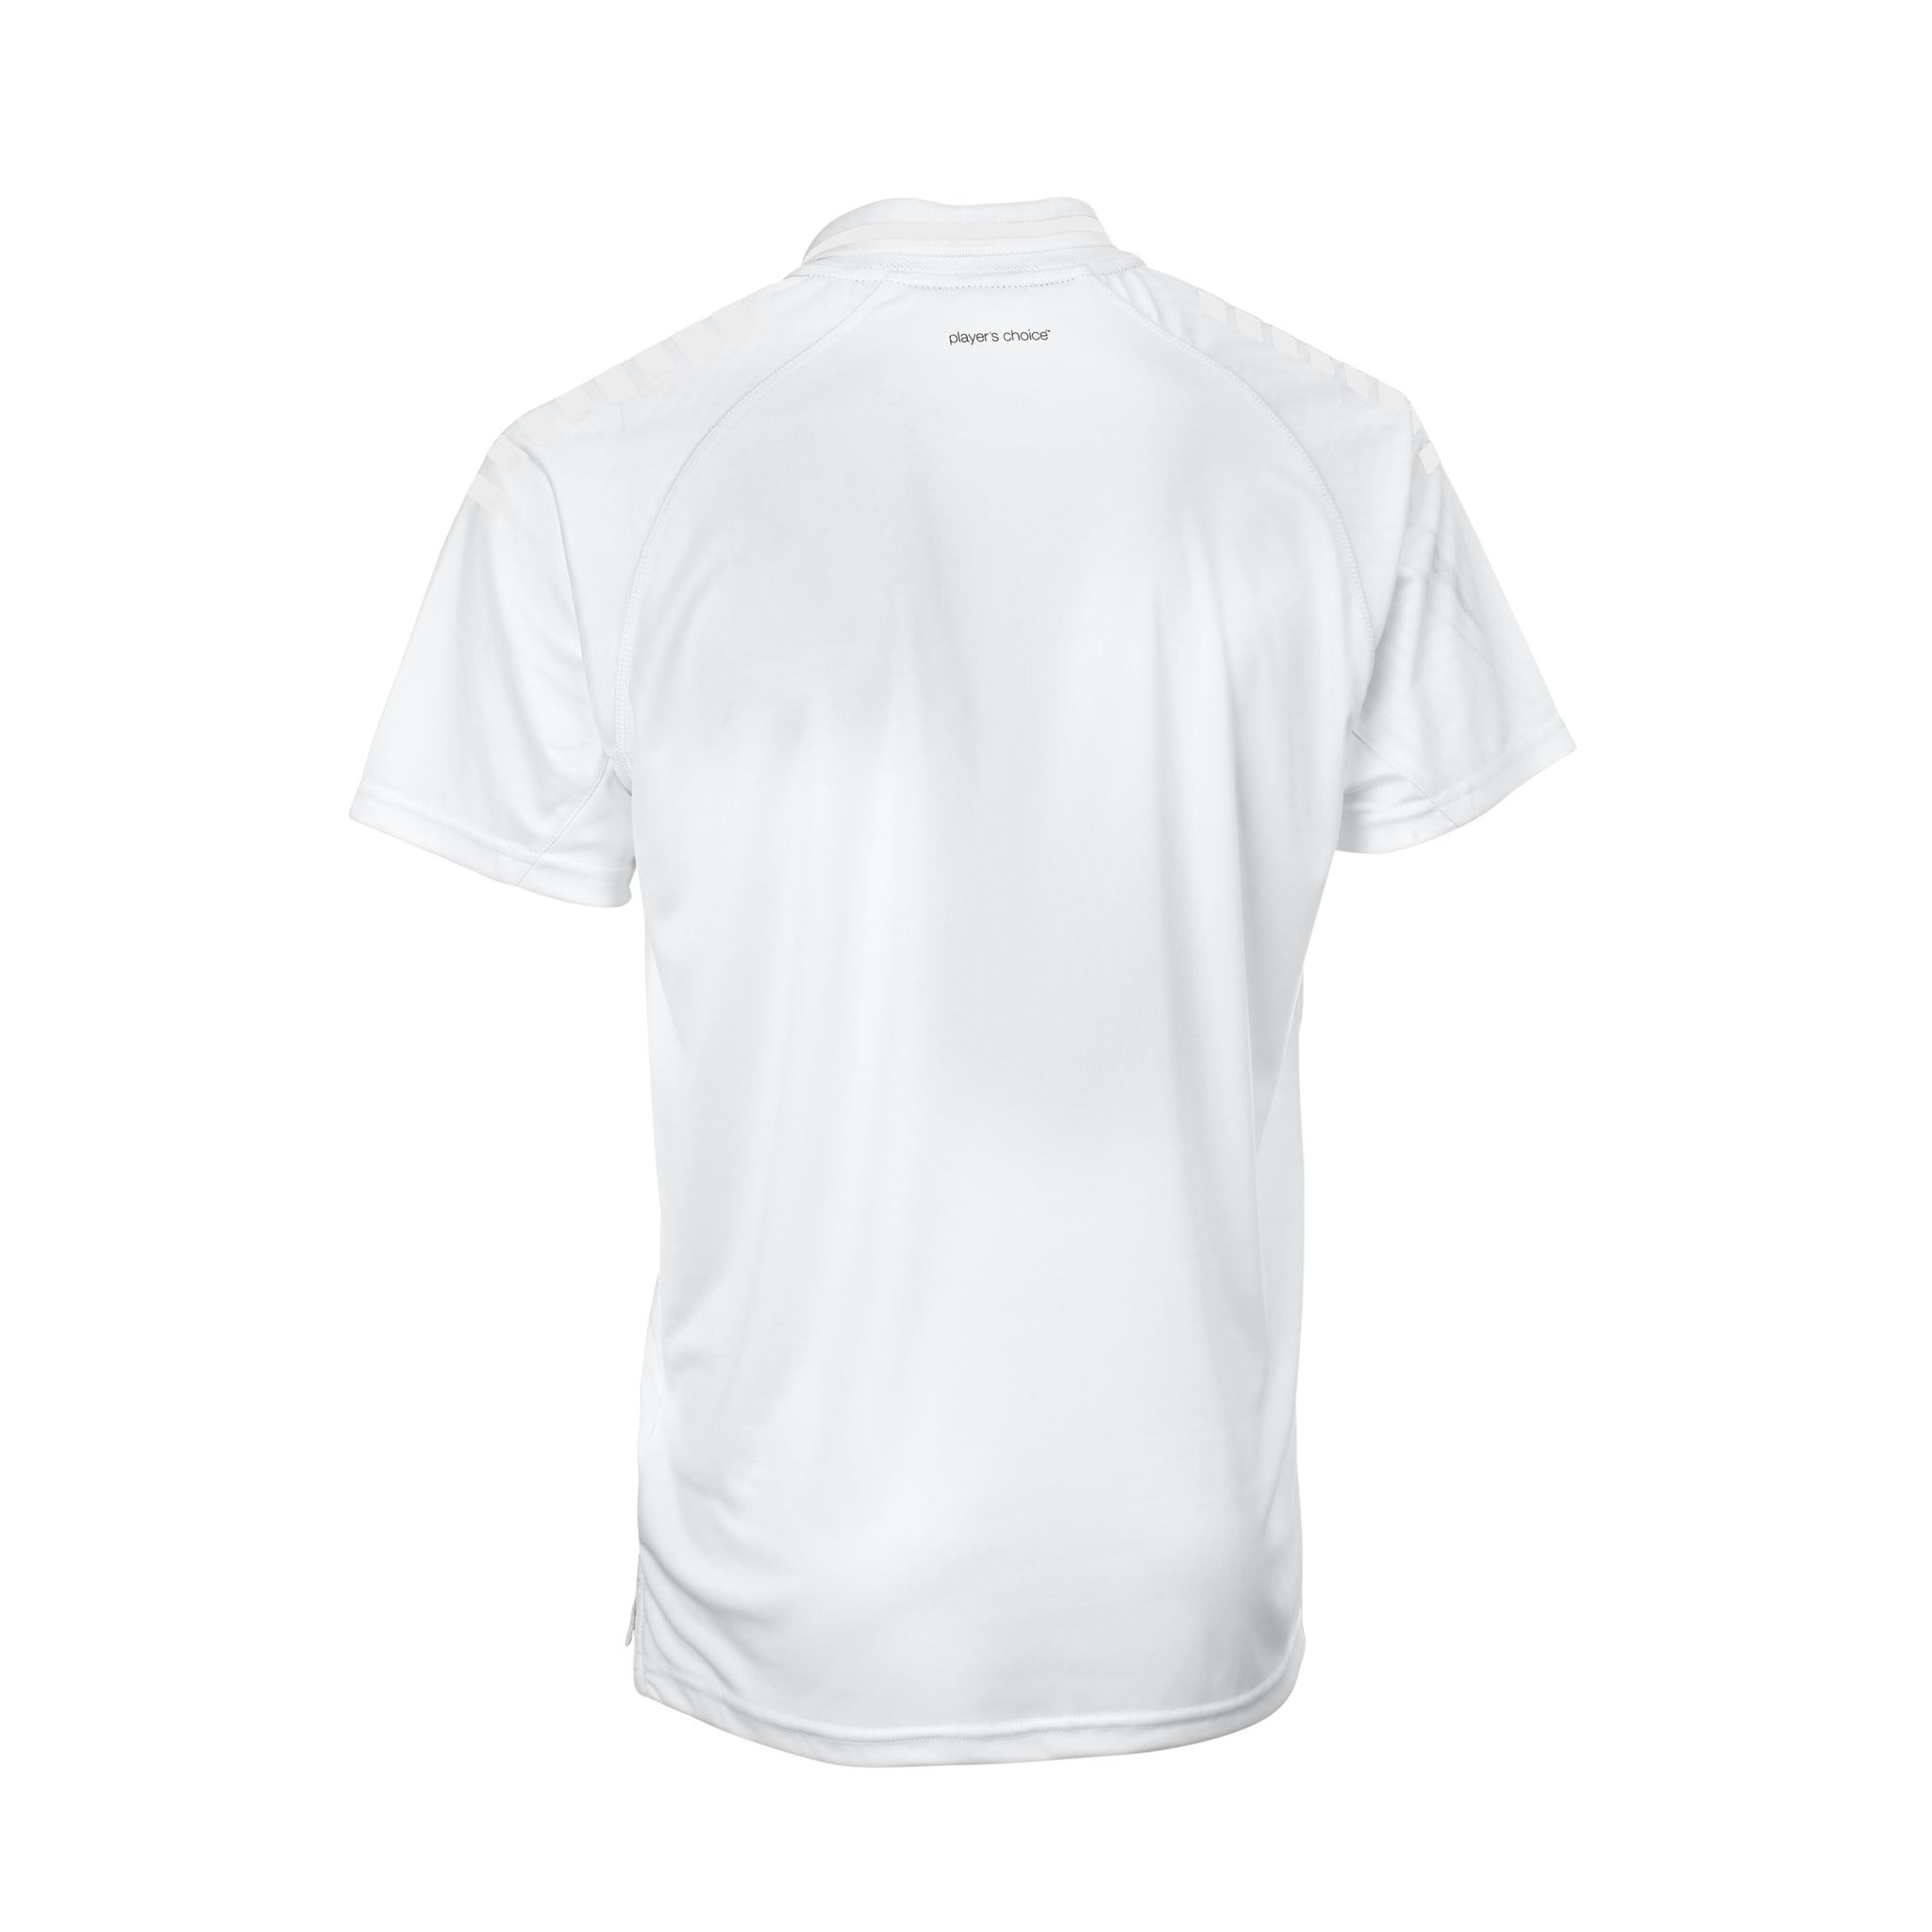 Primo Polo-Shirt v24 #farbe_weiß/schwarz #farbe_weiß/weiß